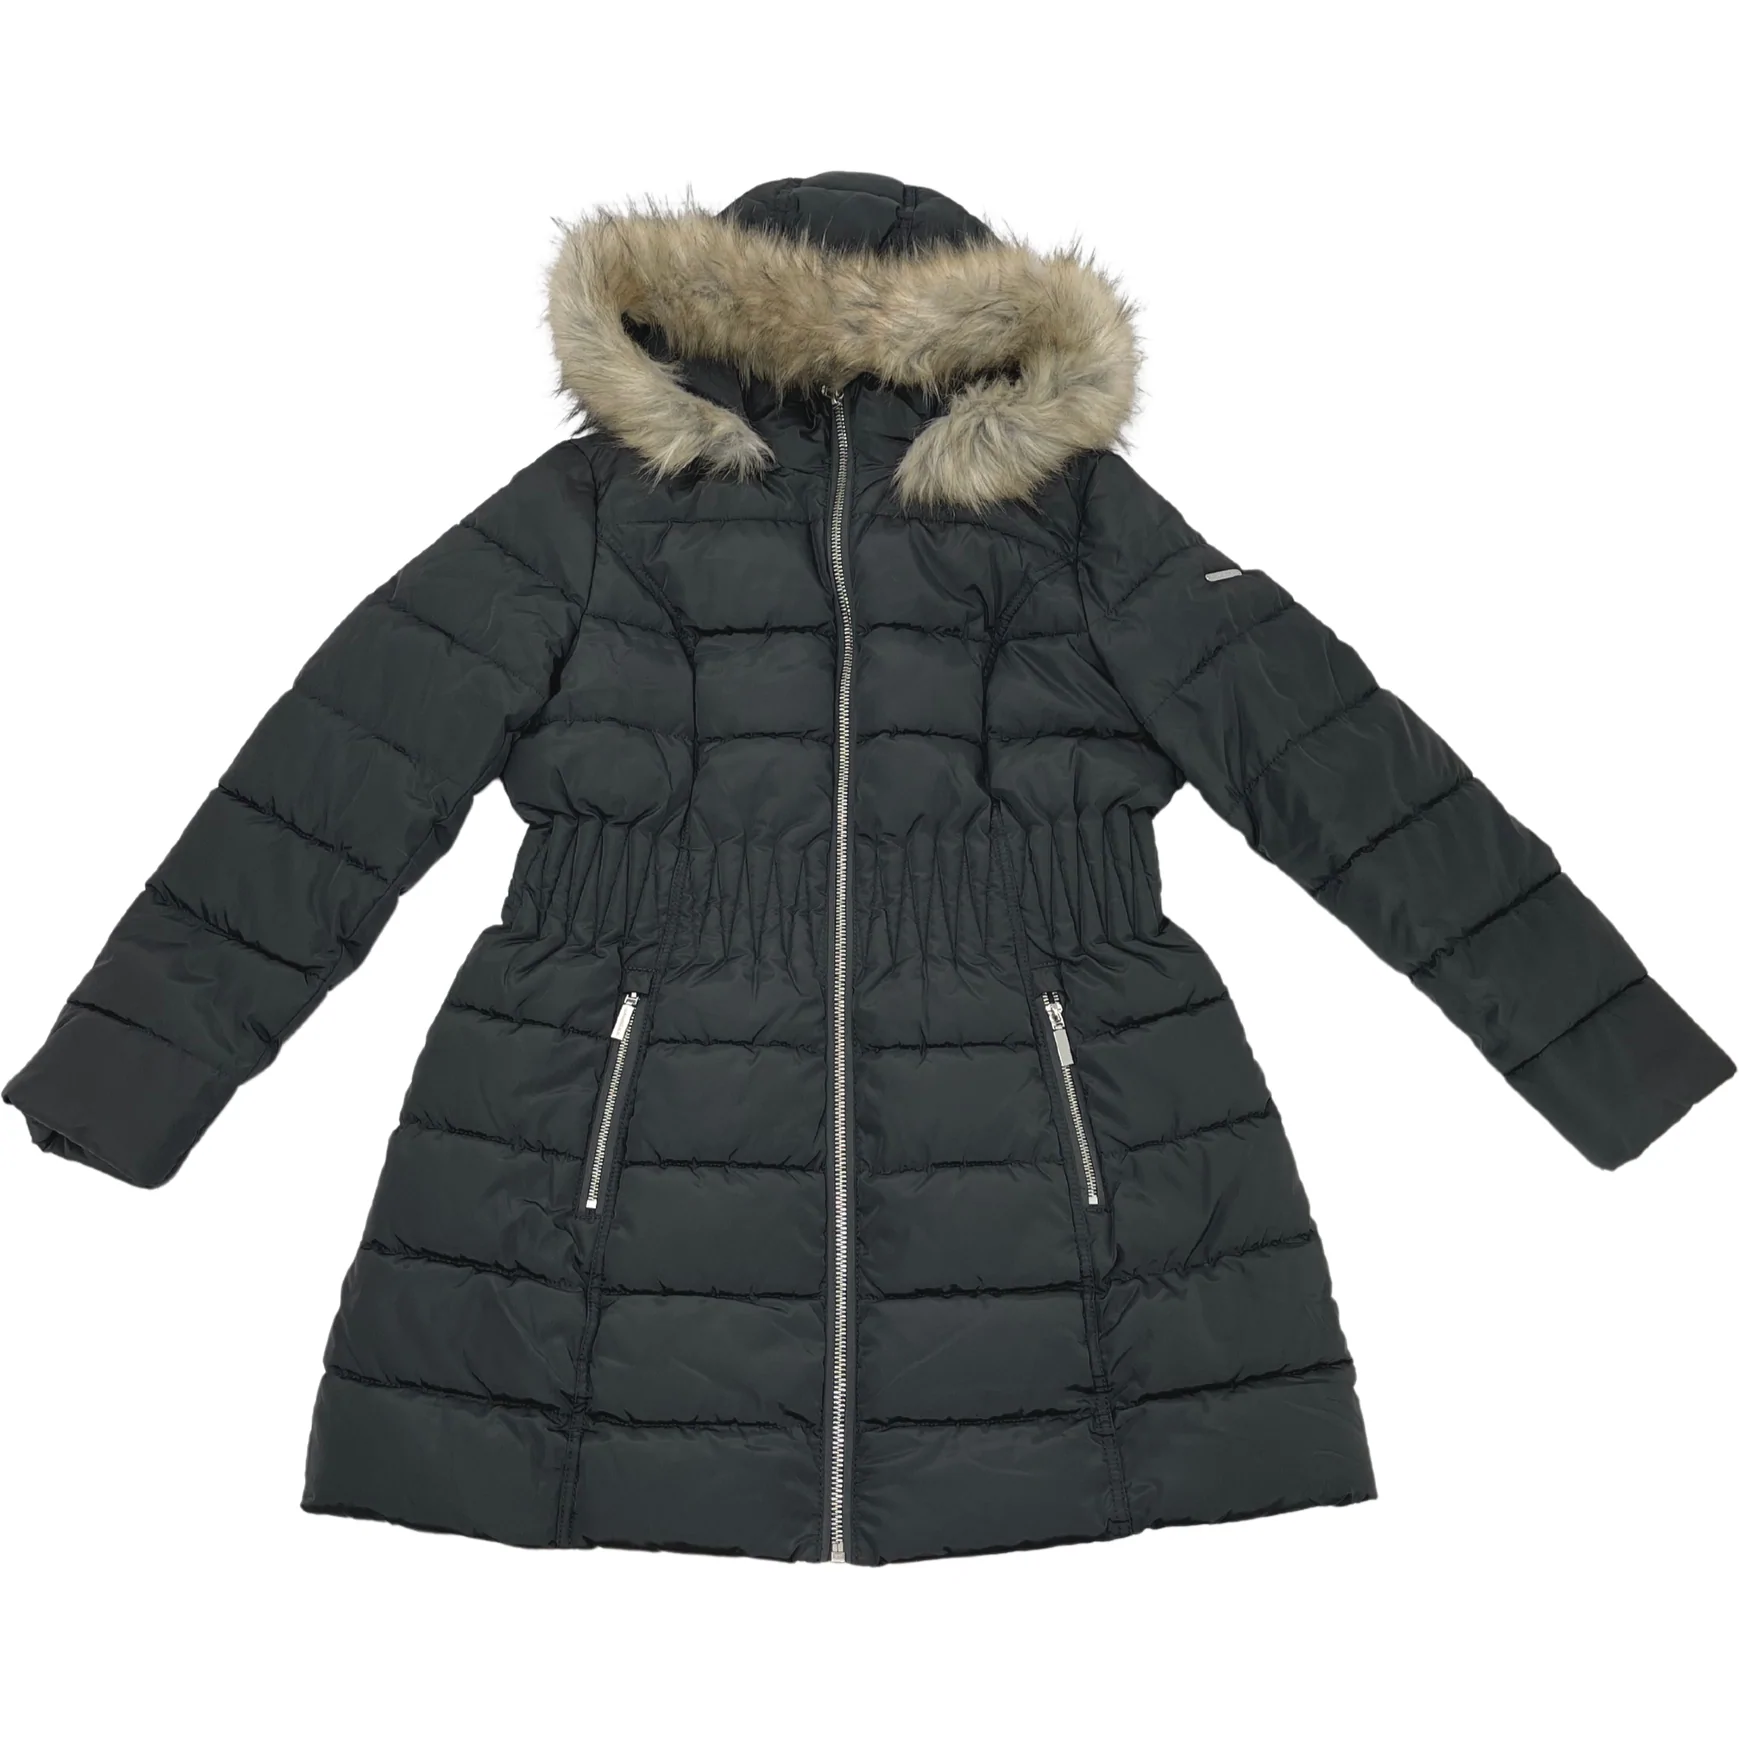 Laundry Women's Winter Jacket / Black / Faux Fur / Size XL **No Tags**